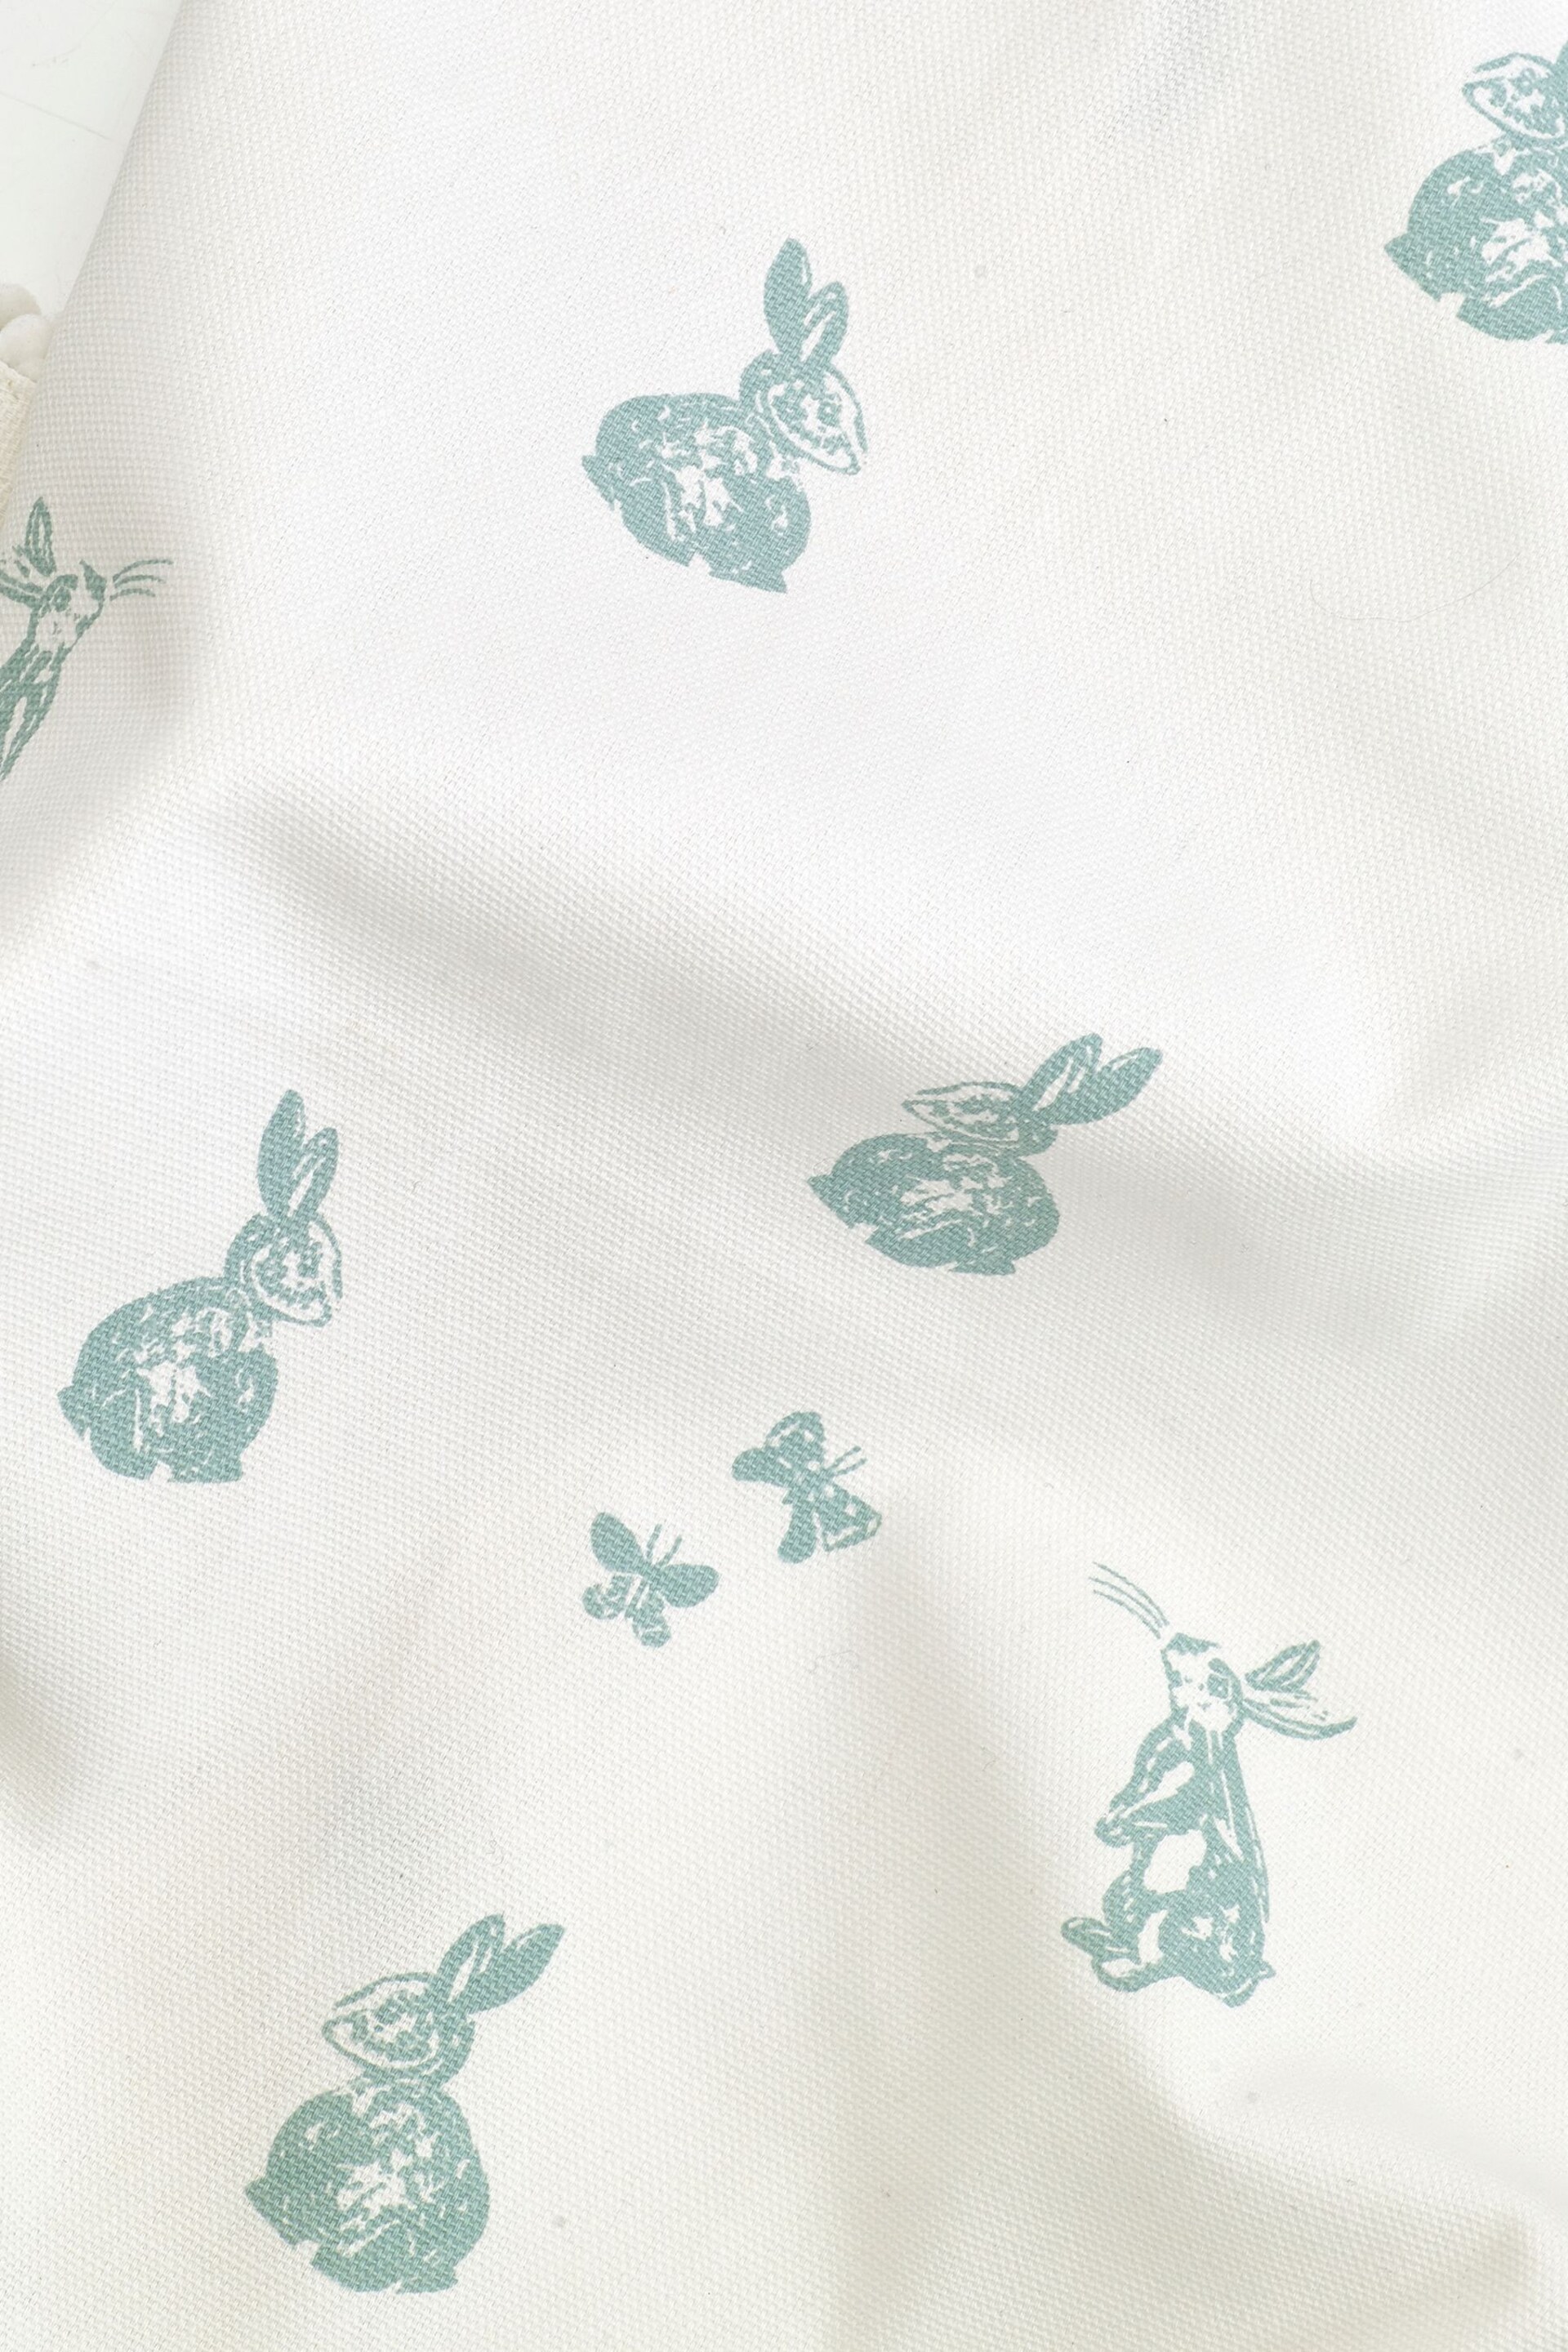 Set of 4 Teal Blue Bunny Rabbit Cotton Pom Napkins - Image 4 of 4